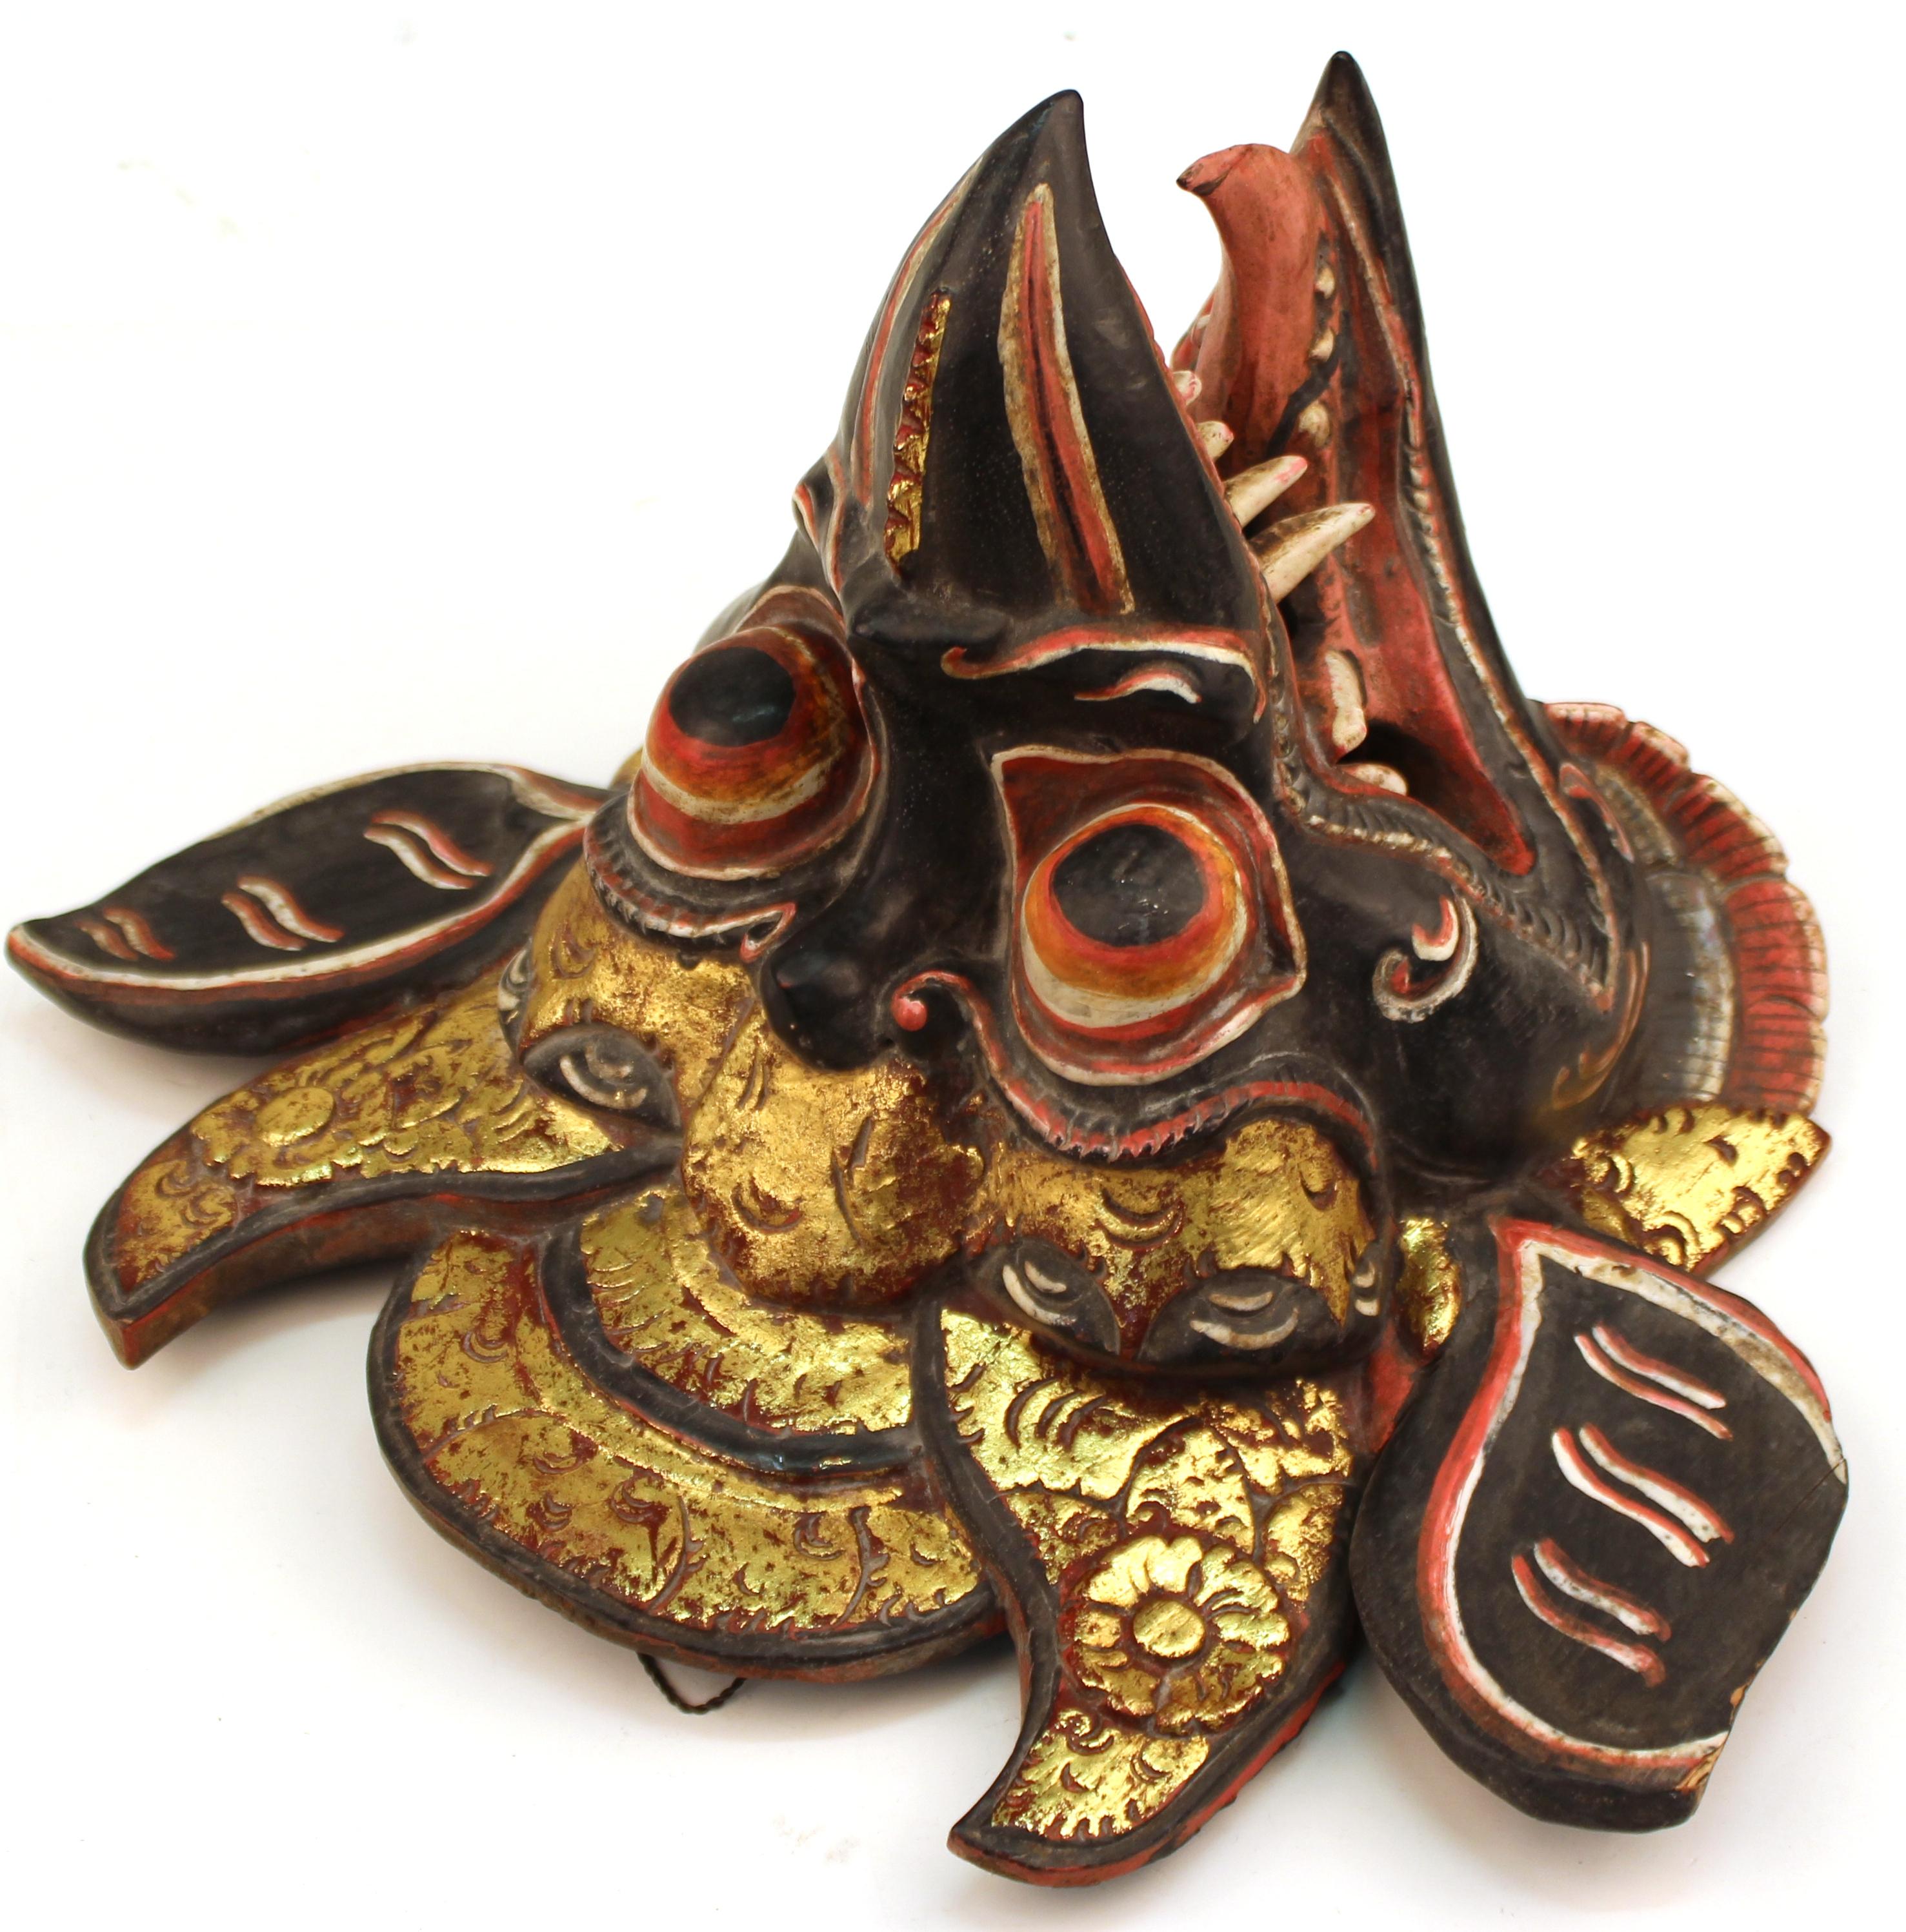 Hand-Painted Balinese Barong Dance Mask of Garuda, the Vehicle of Vishnu